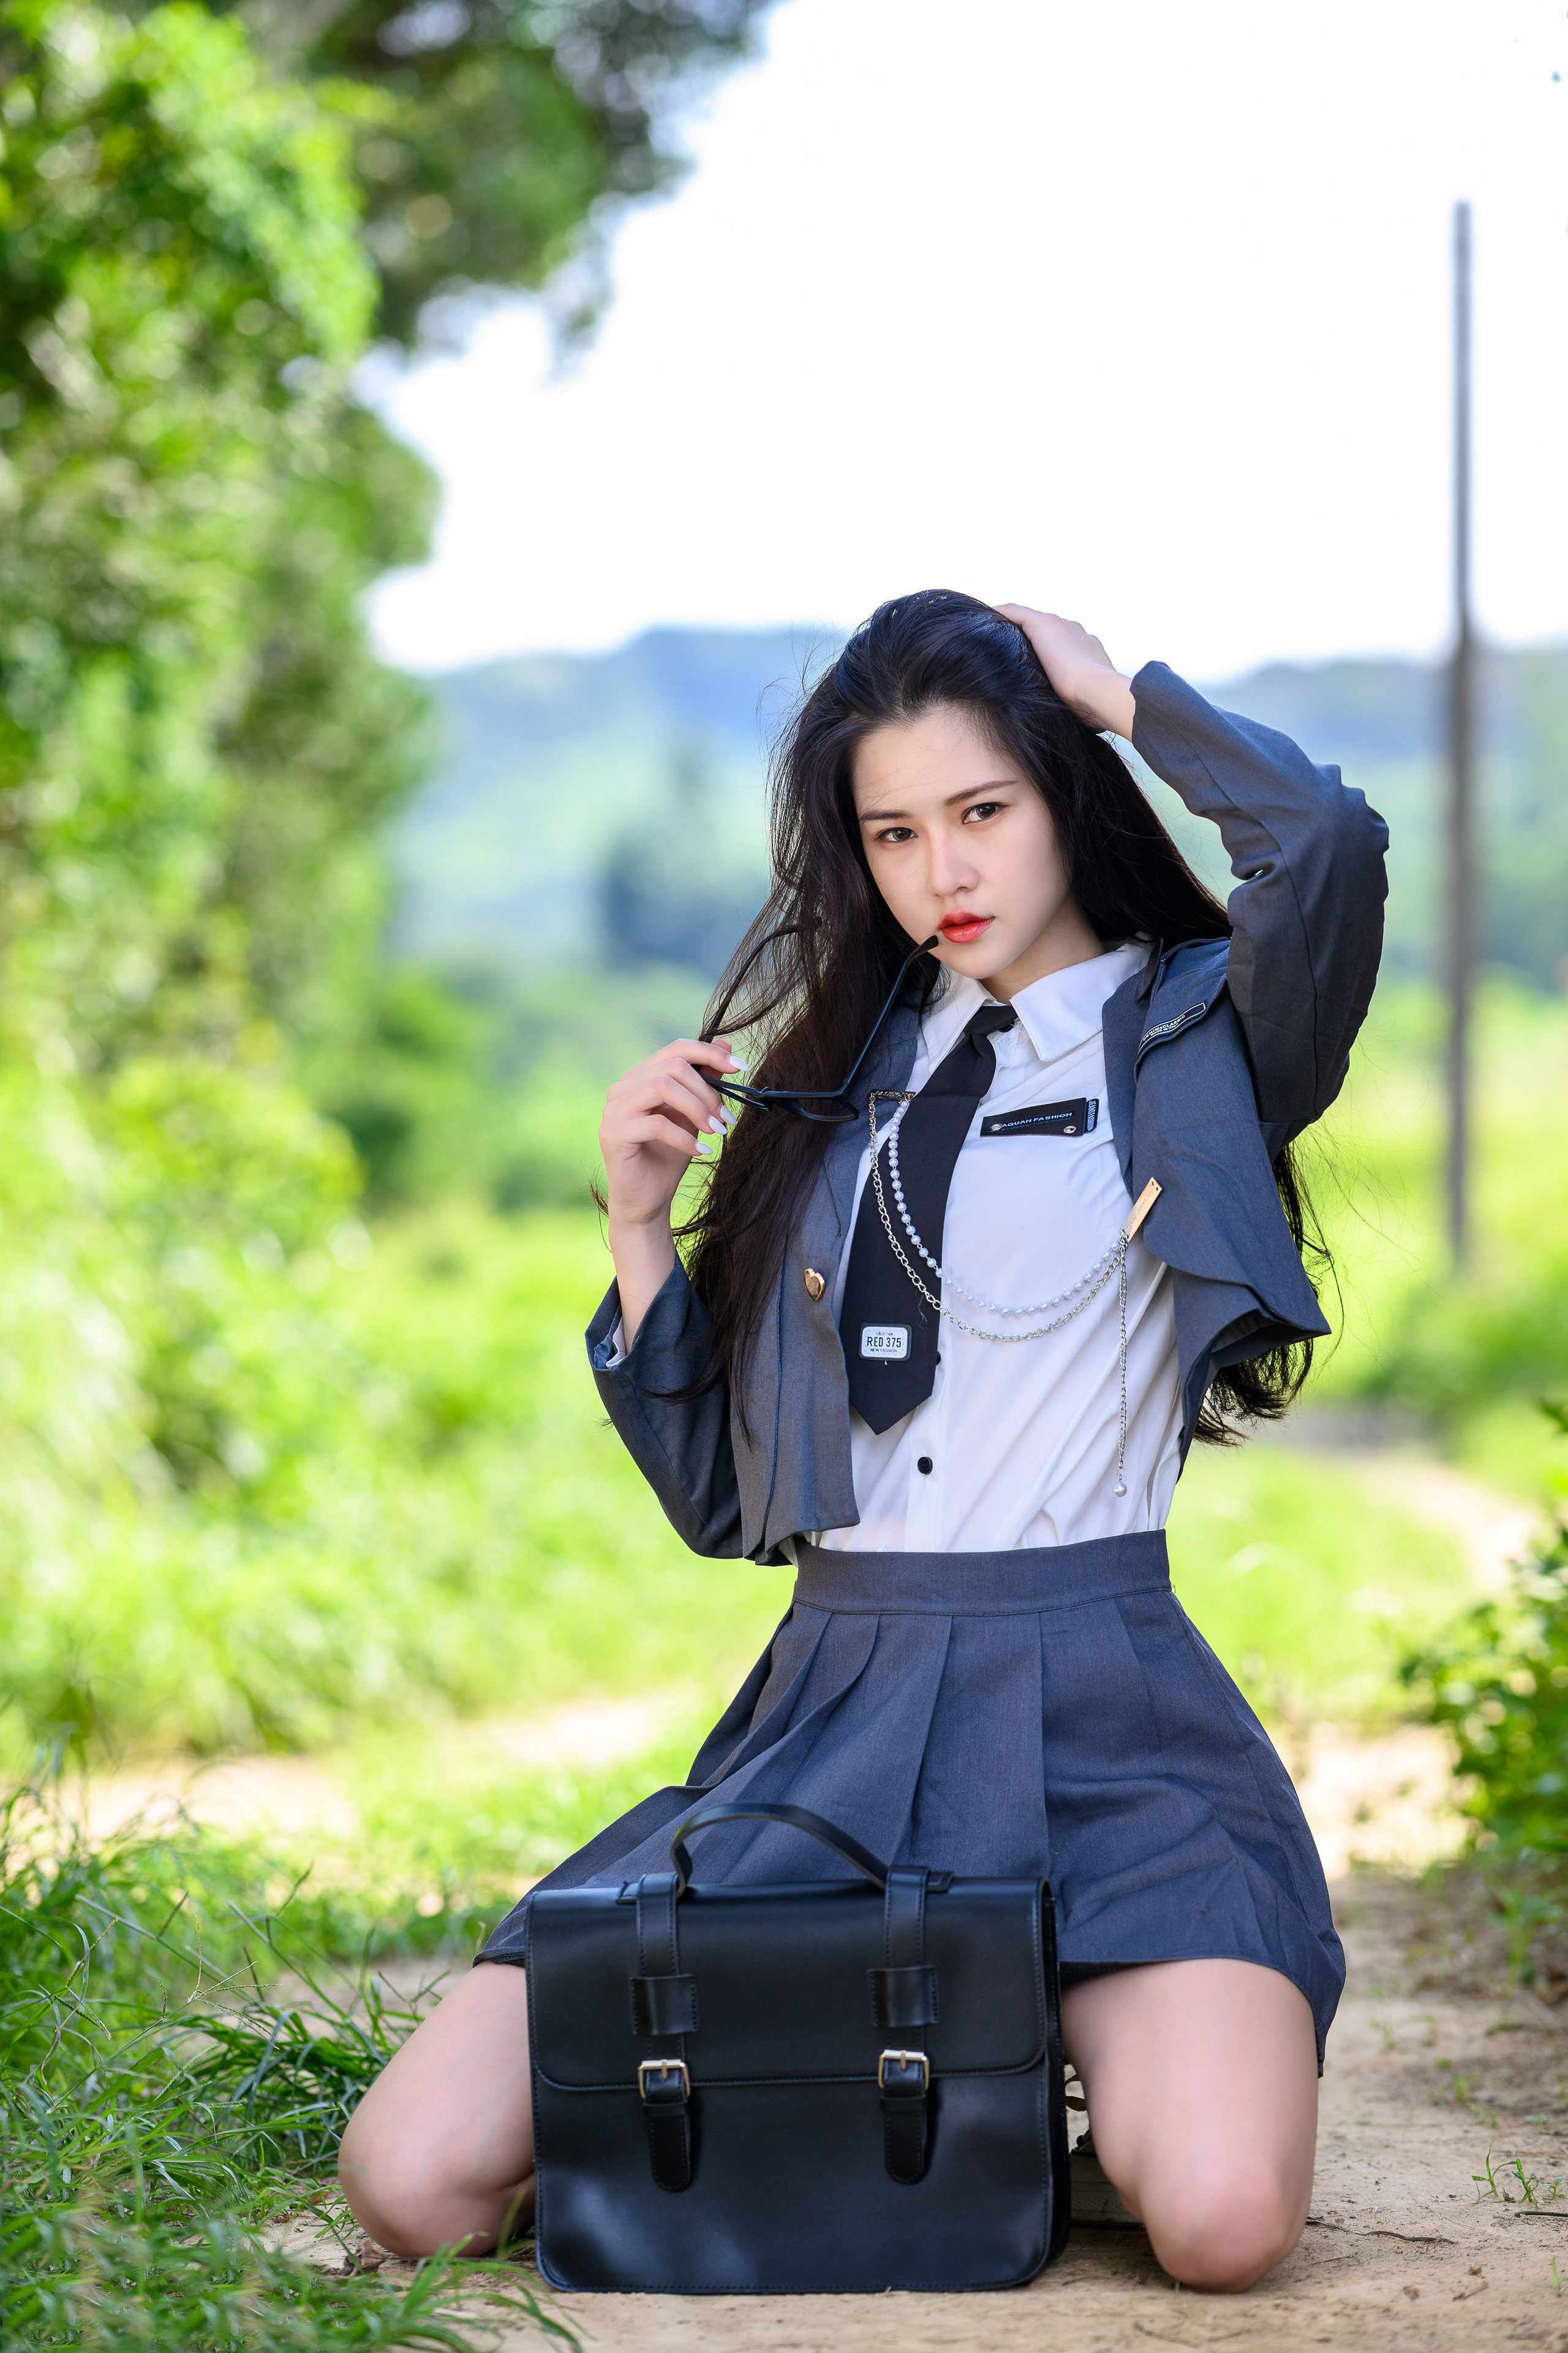 Asian Model Women Long Hair Dark Hair Depth Of Field School Uniform Grass Bushes Trees Glasses Tie U 2560x3841